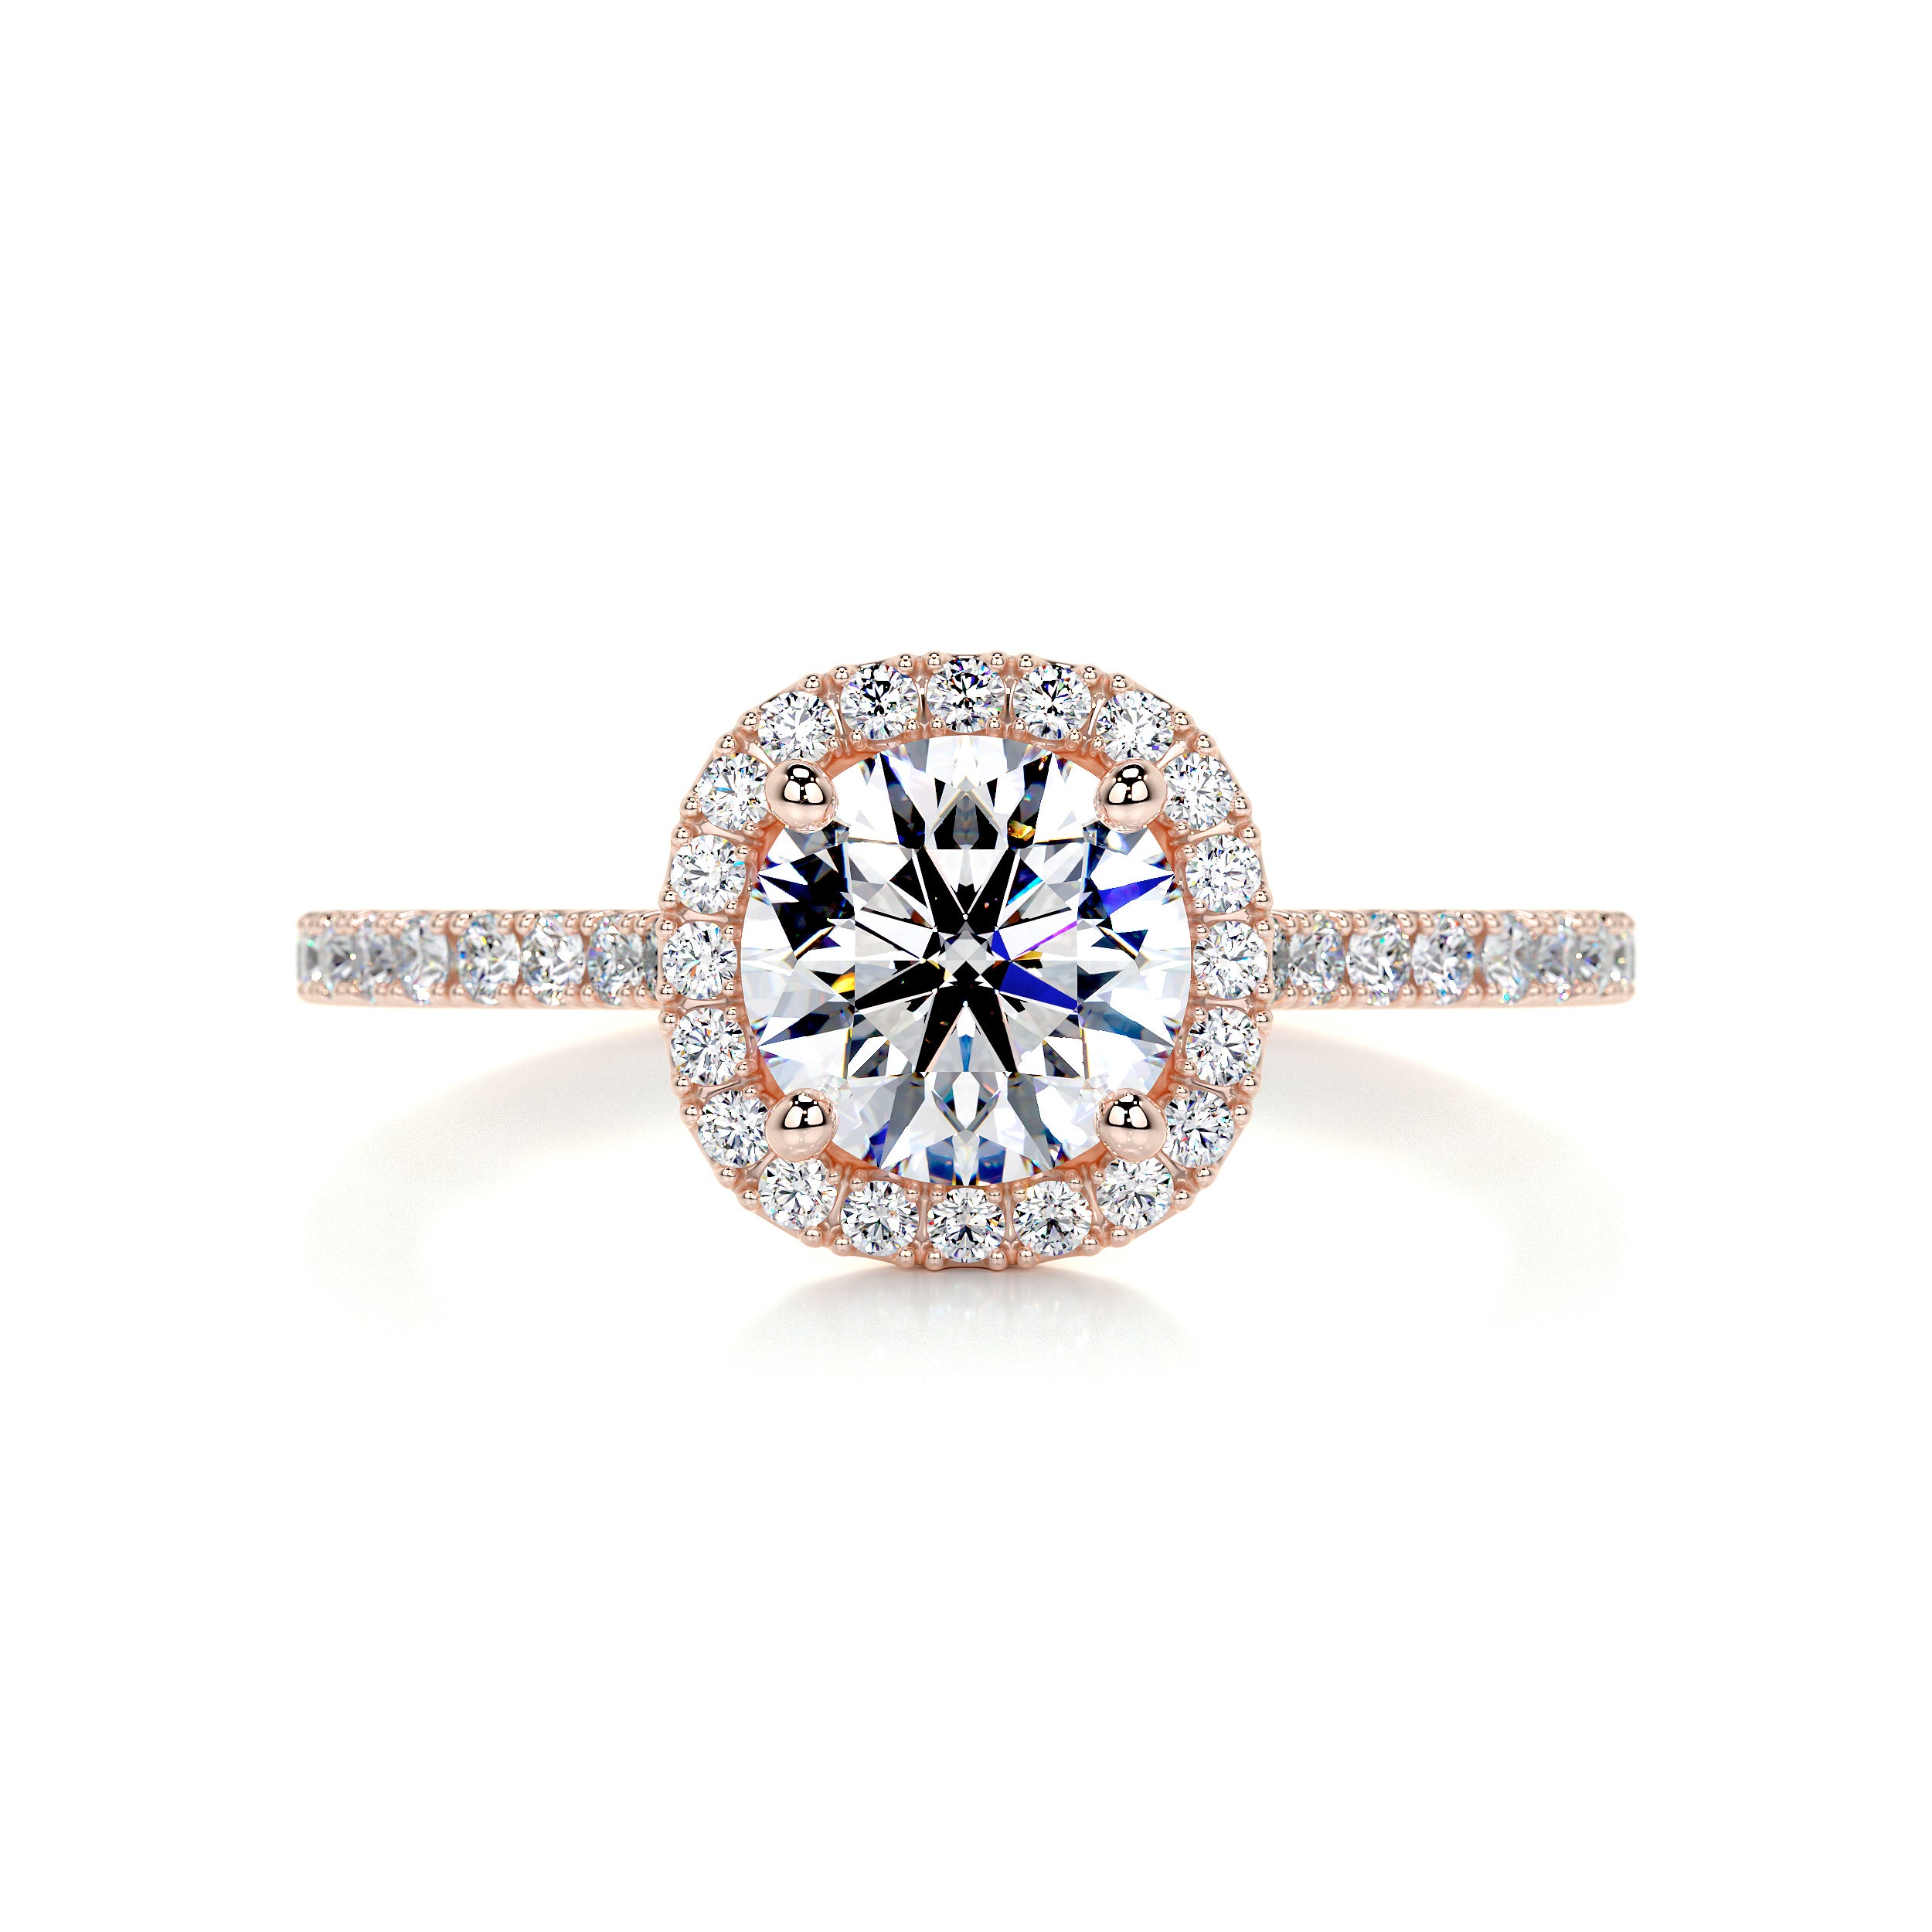 Claudia Diamond Engagement Ring   (1.35 Carat) -14K Rose Gold